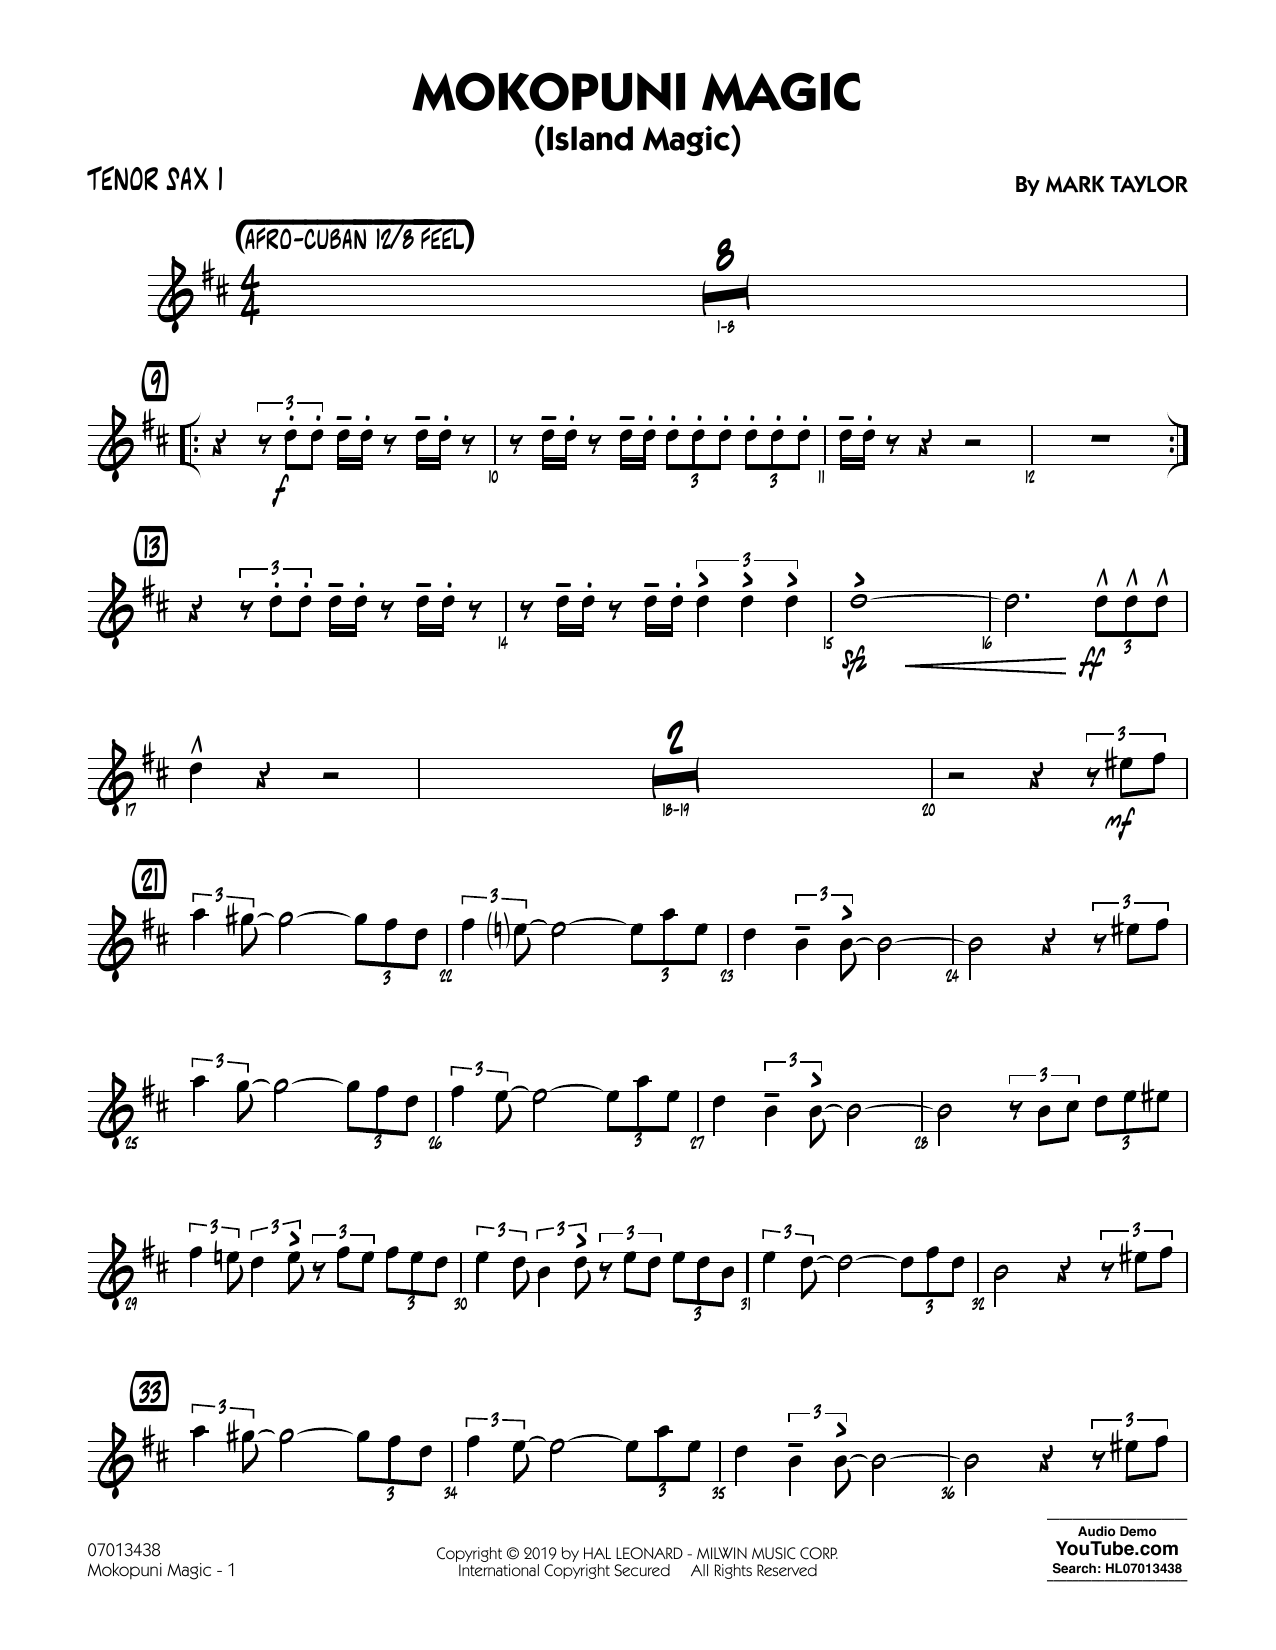 Download Mark Taylor Mokopuni Magic (Island Magic) - Tenor Sax 1 Sheet Music and learn how to play Jazz Ensemble PDF digital score in minutes